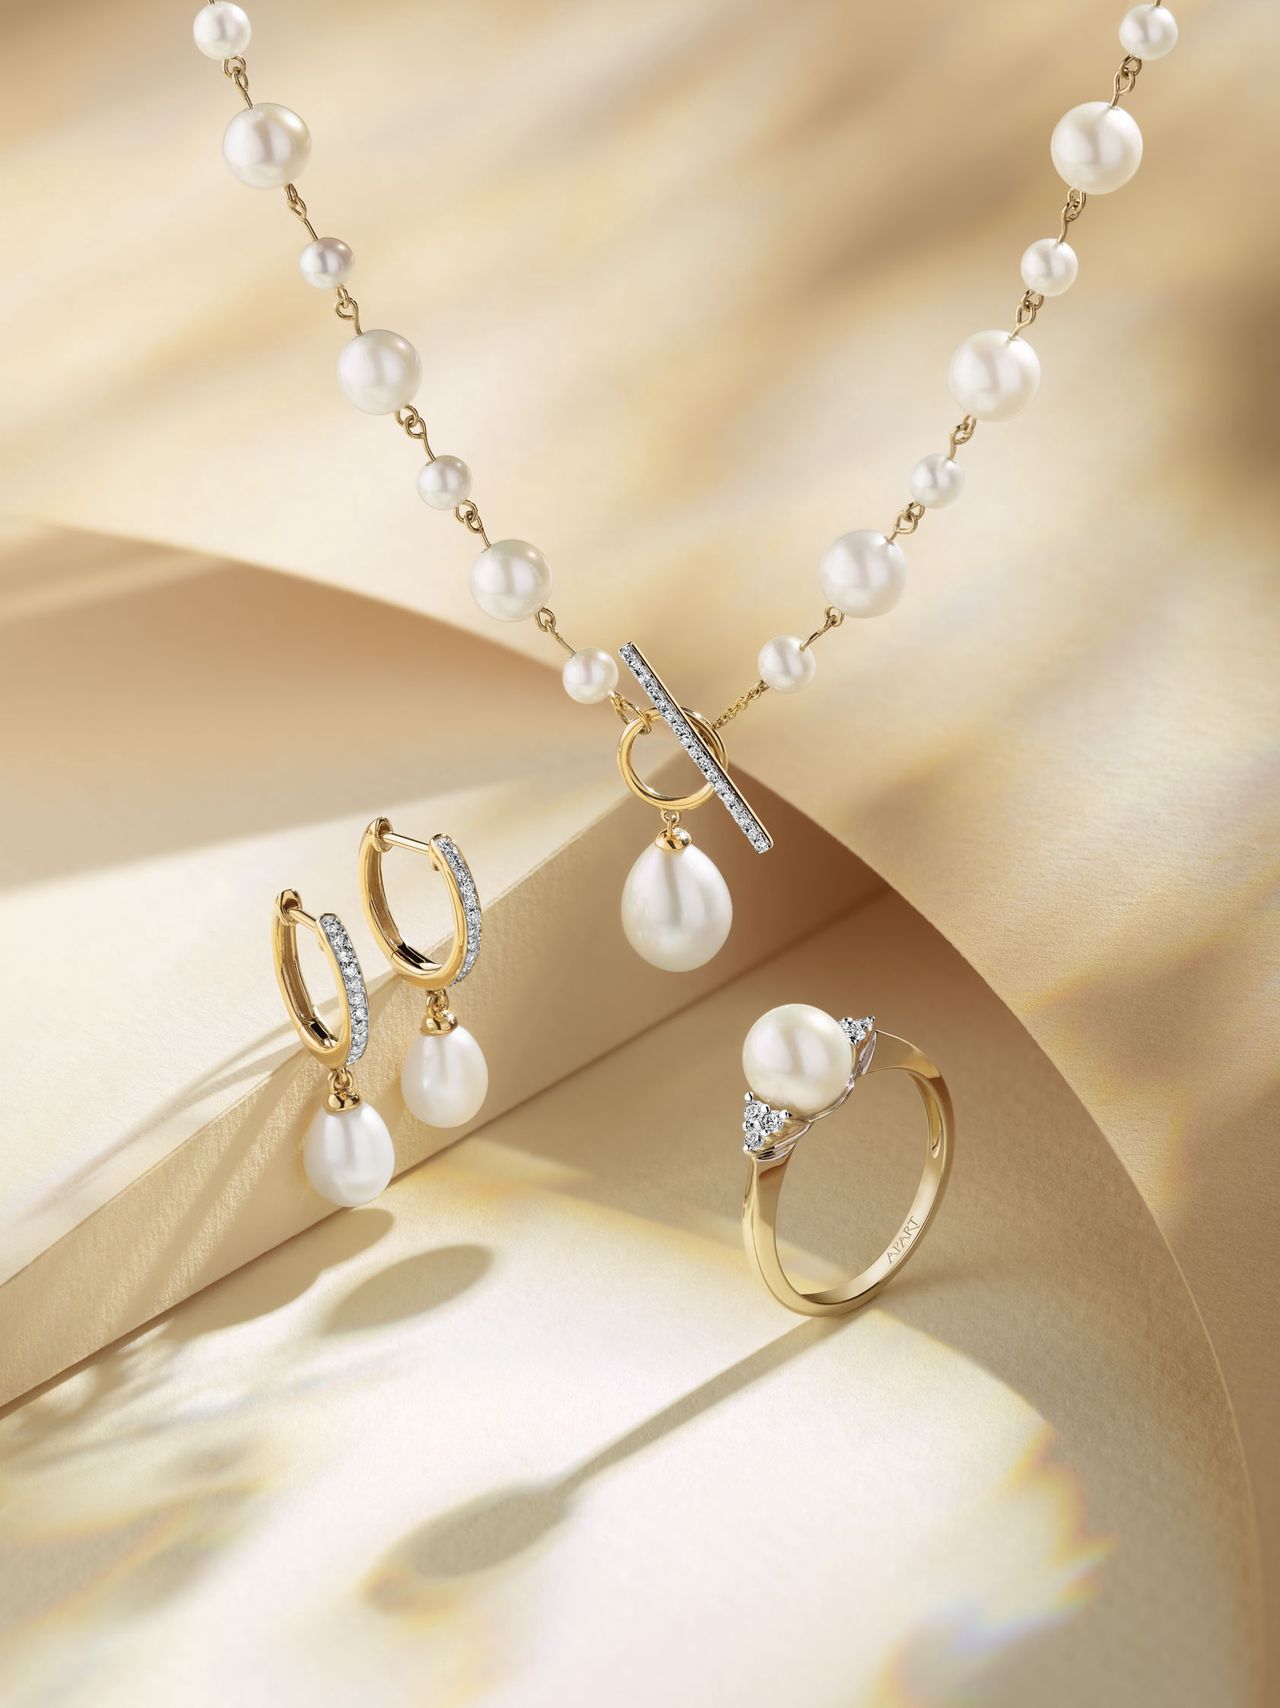  Biżuteria z diamentami i perłami, wzór 220.159, 220.224, 109.304; Apart.pl